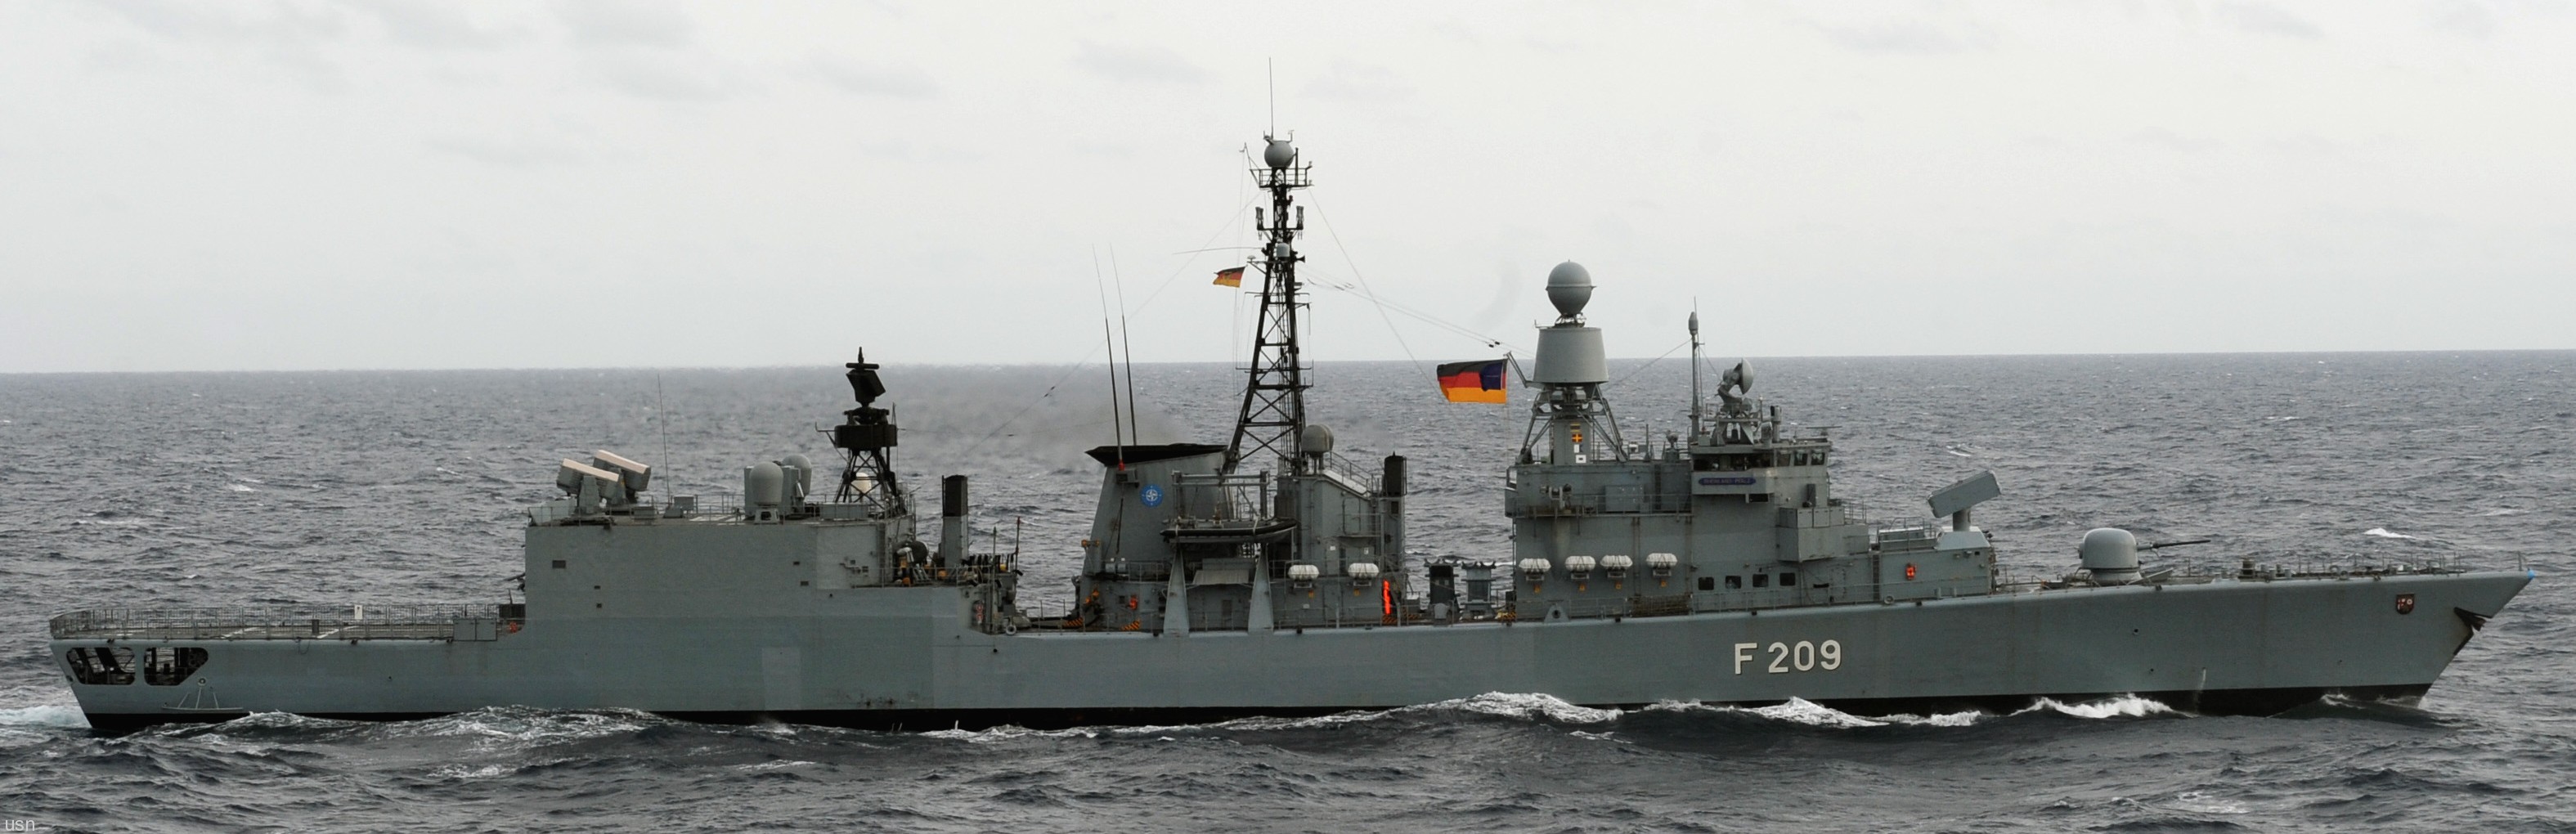 f-209 fgs rheinland-pfalz type 122 bremen class frigate german navy 05